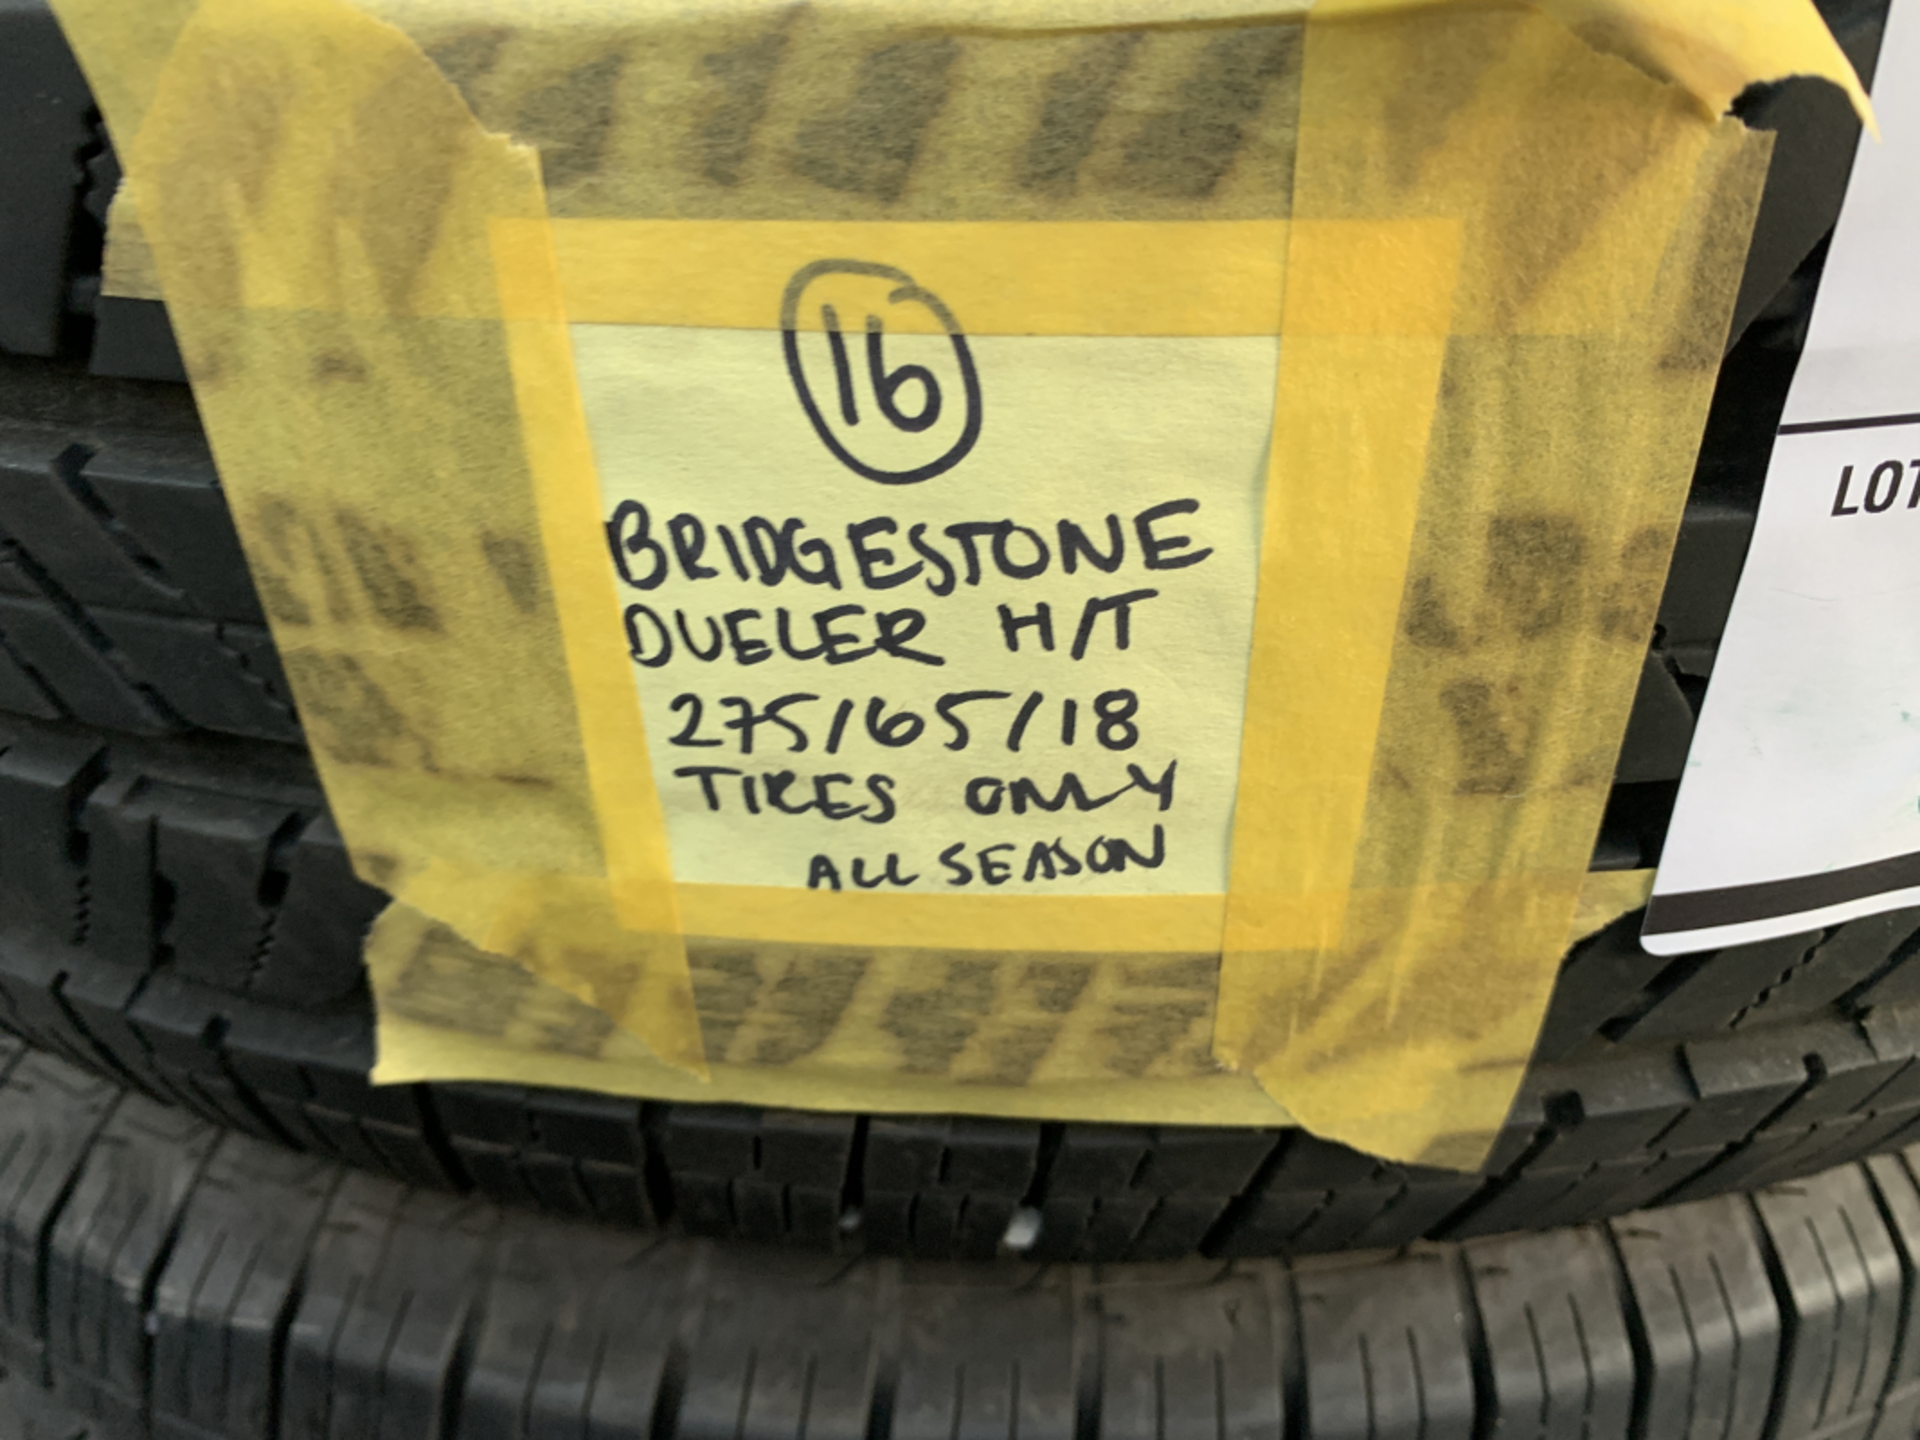 Bridgestone - Dueler H/T All Season Tires - Size 275/65/R18 - Image 2 of 5